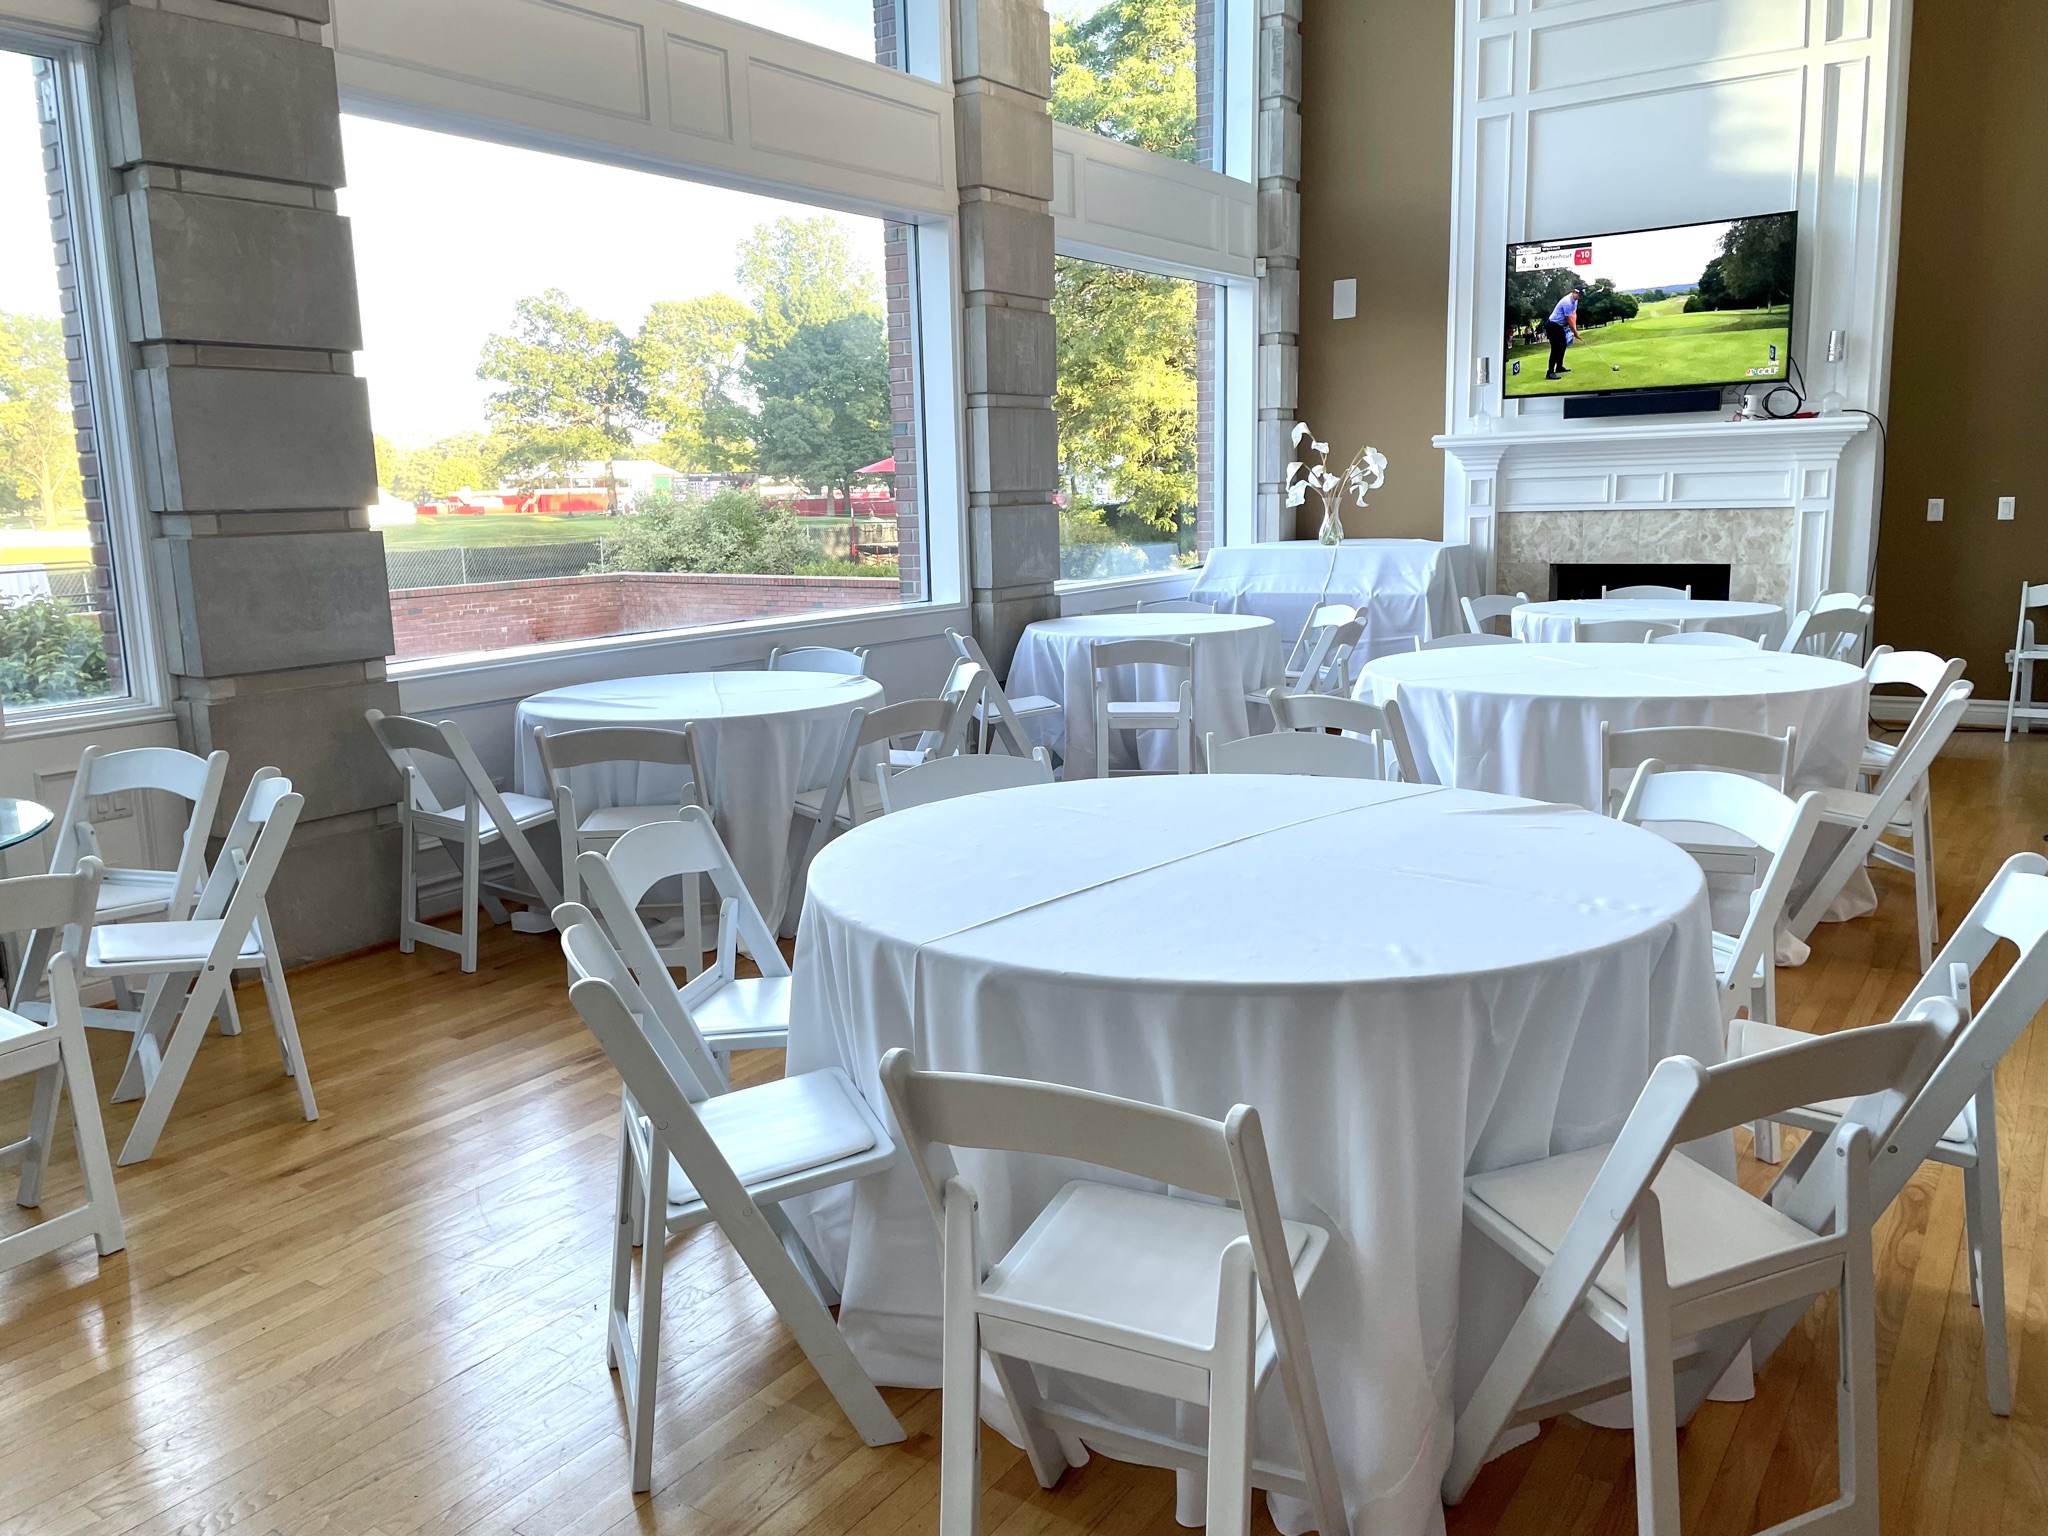 Hospitality Venue - Tables set up